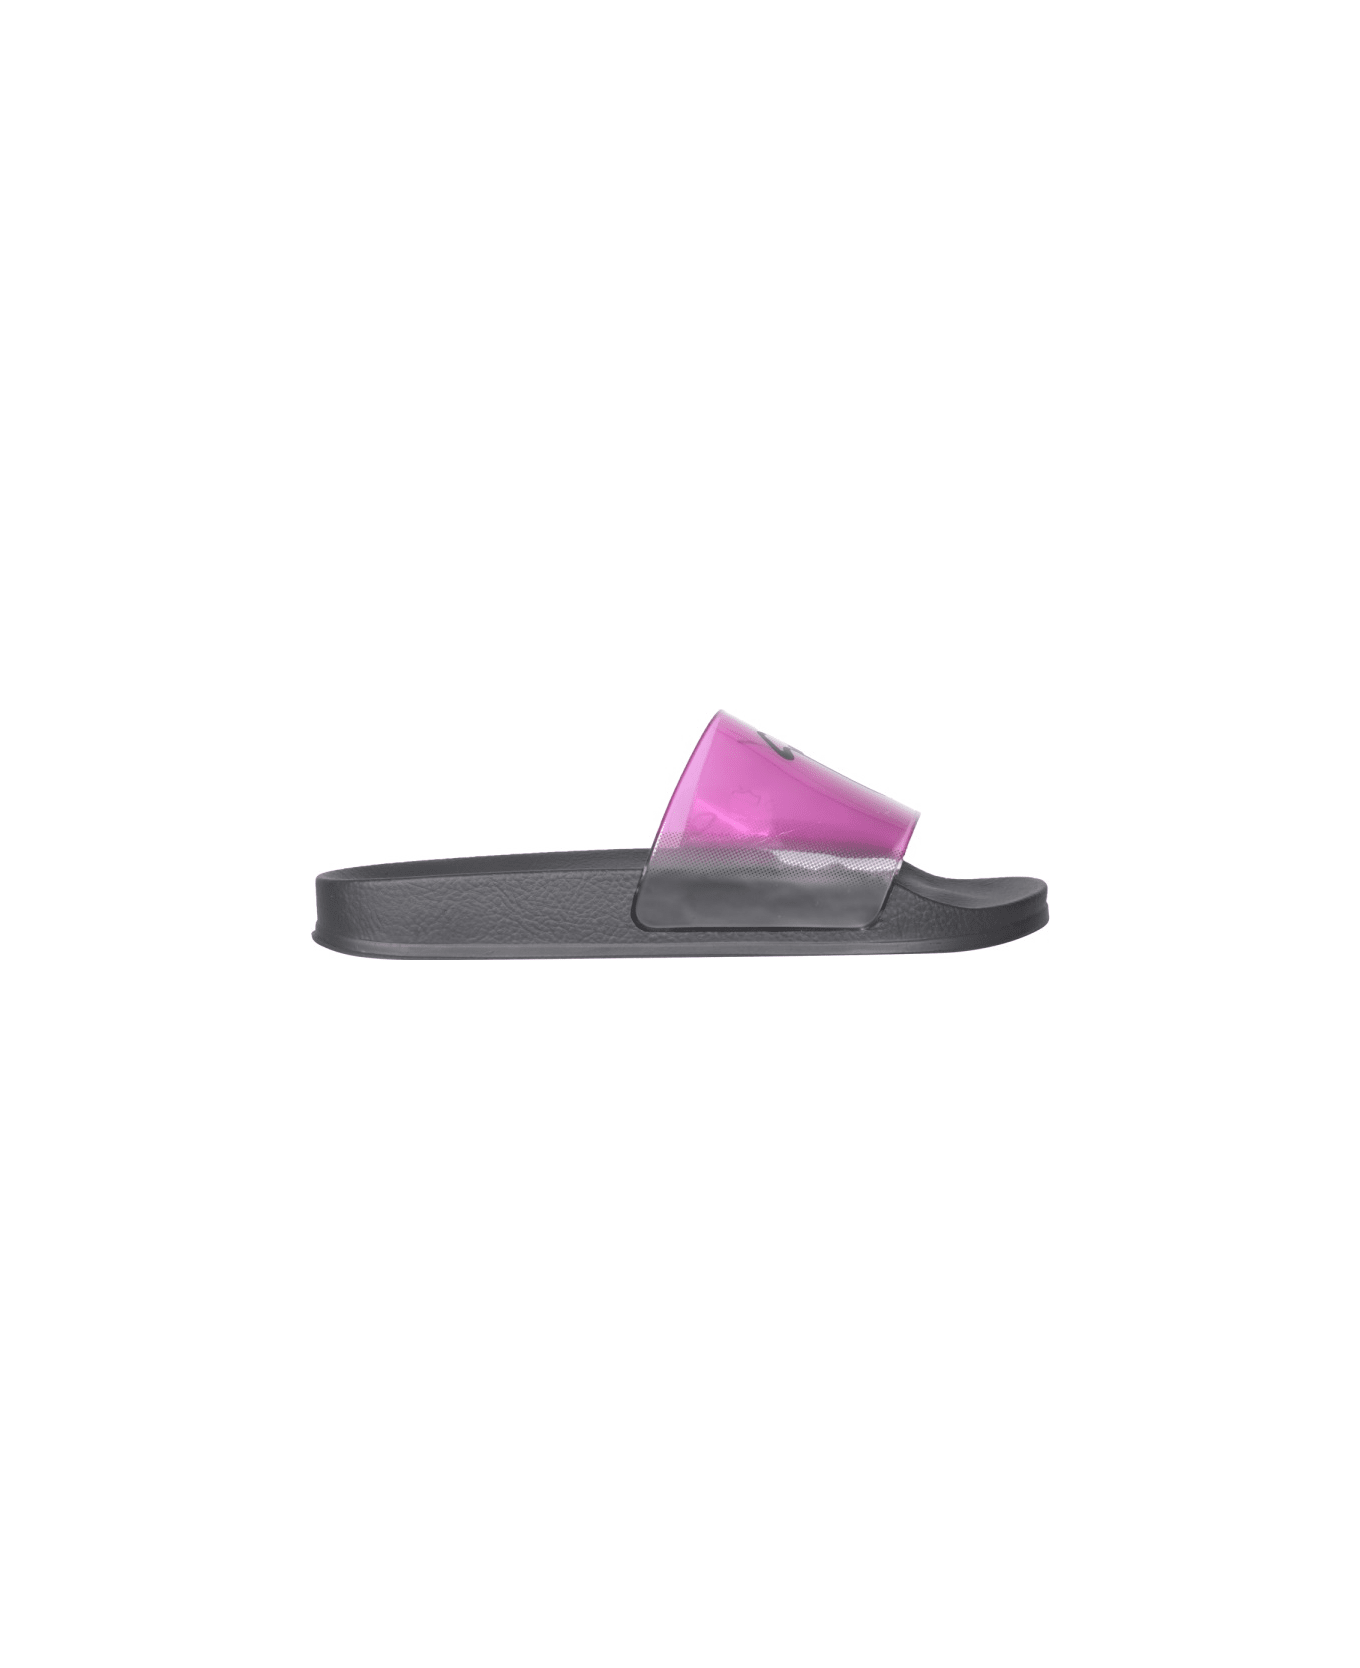 Giuseppe Zanotti Slide Sandals With Logo - FUCHSIA サンダル